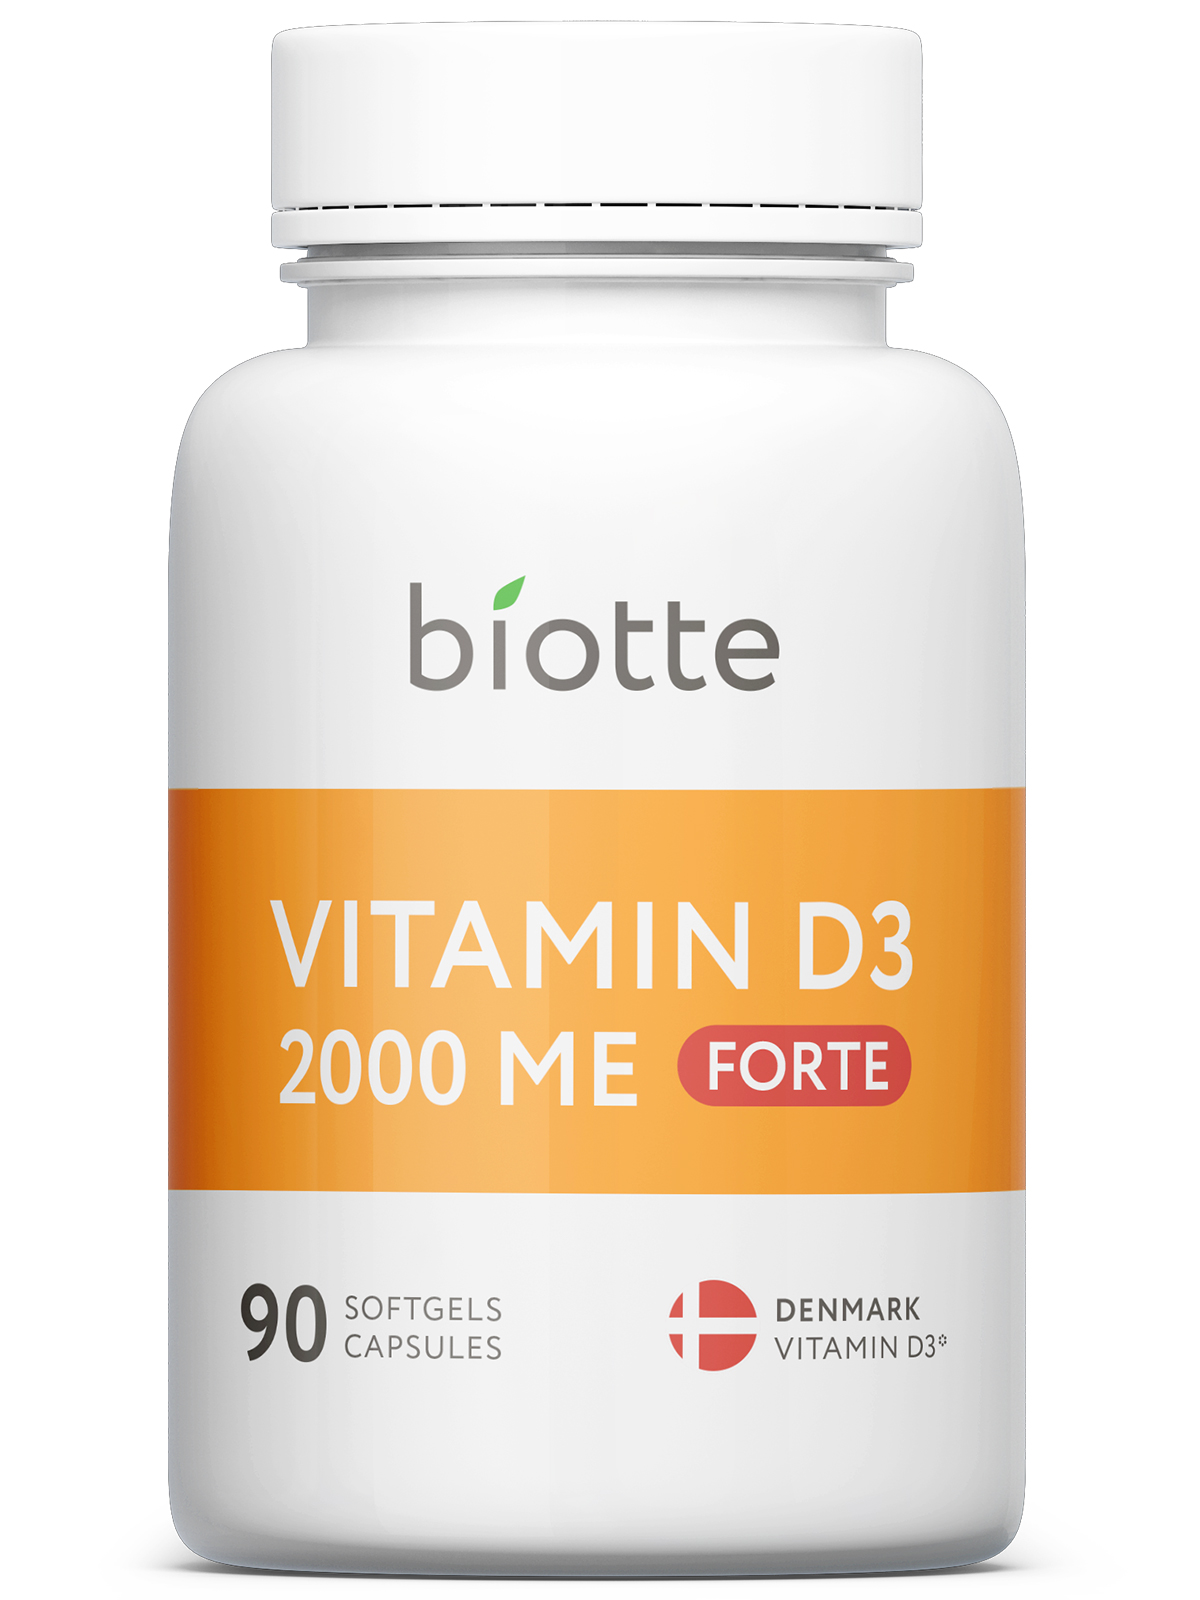 Витамин Д3 Biotte форте 2000 мг Холекальциферол капсулы 90 шт.  - купить со скидкой